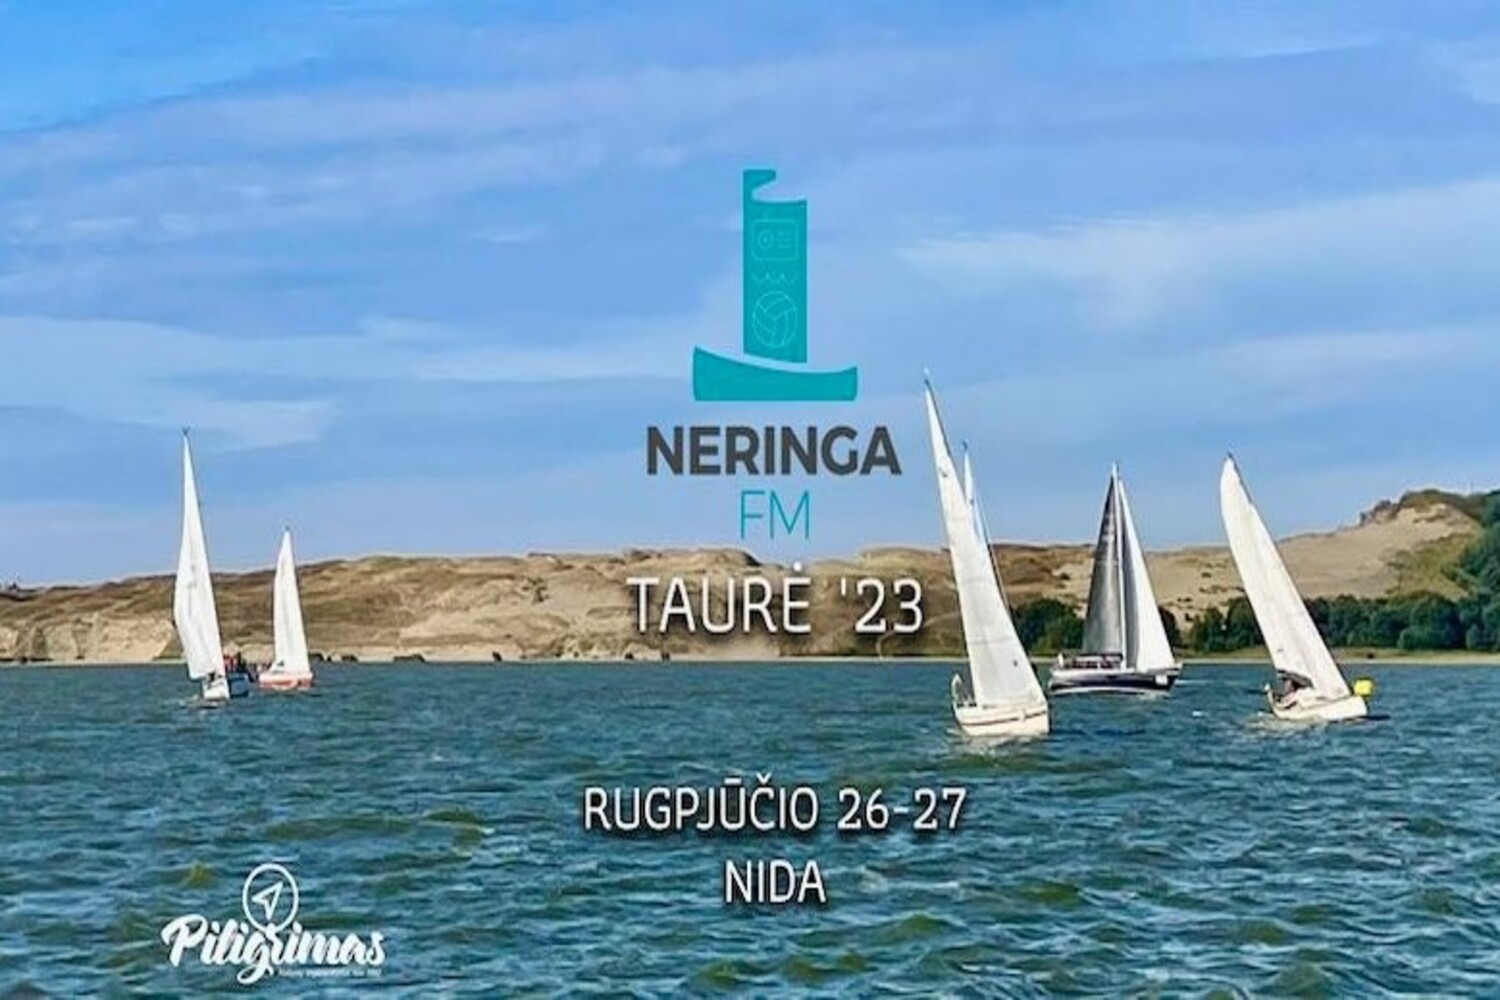 Jachtų regata Neringa FM taurė '23